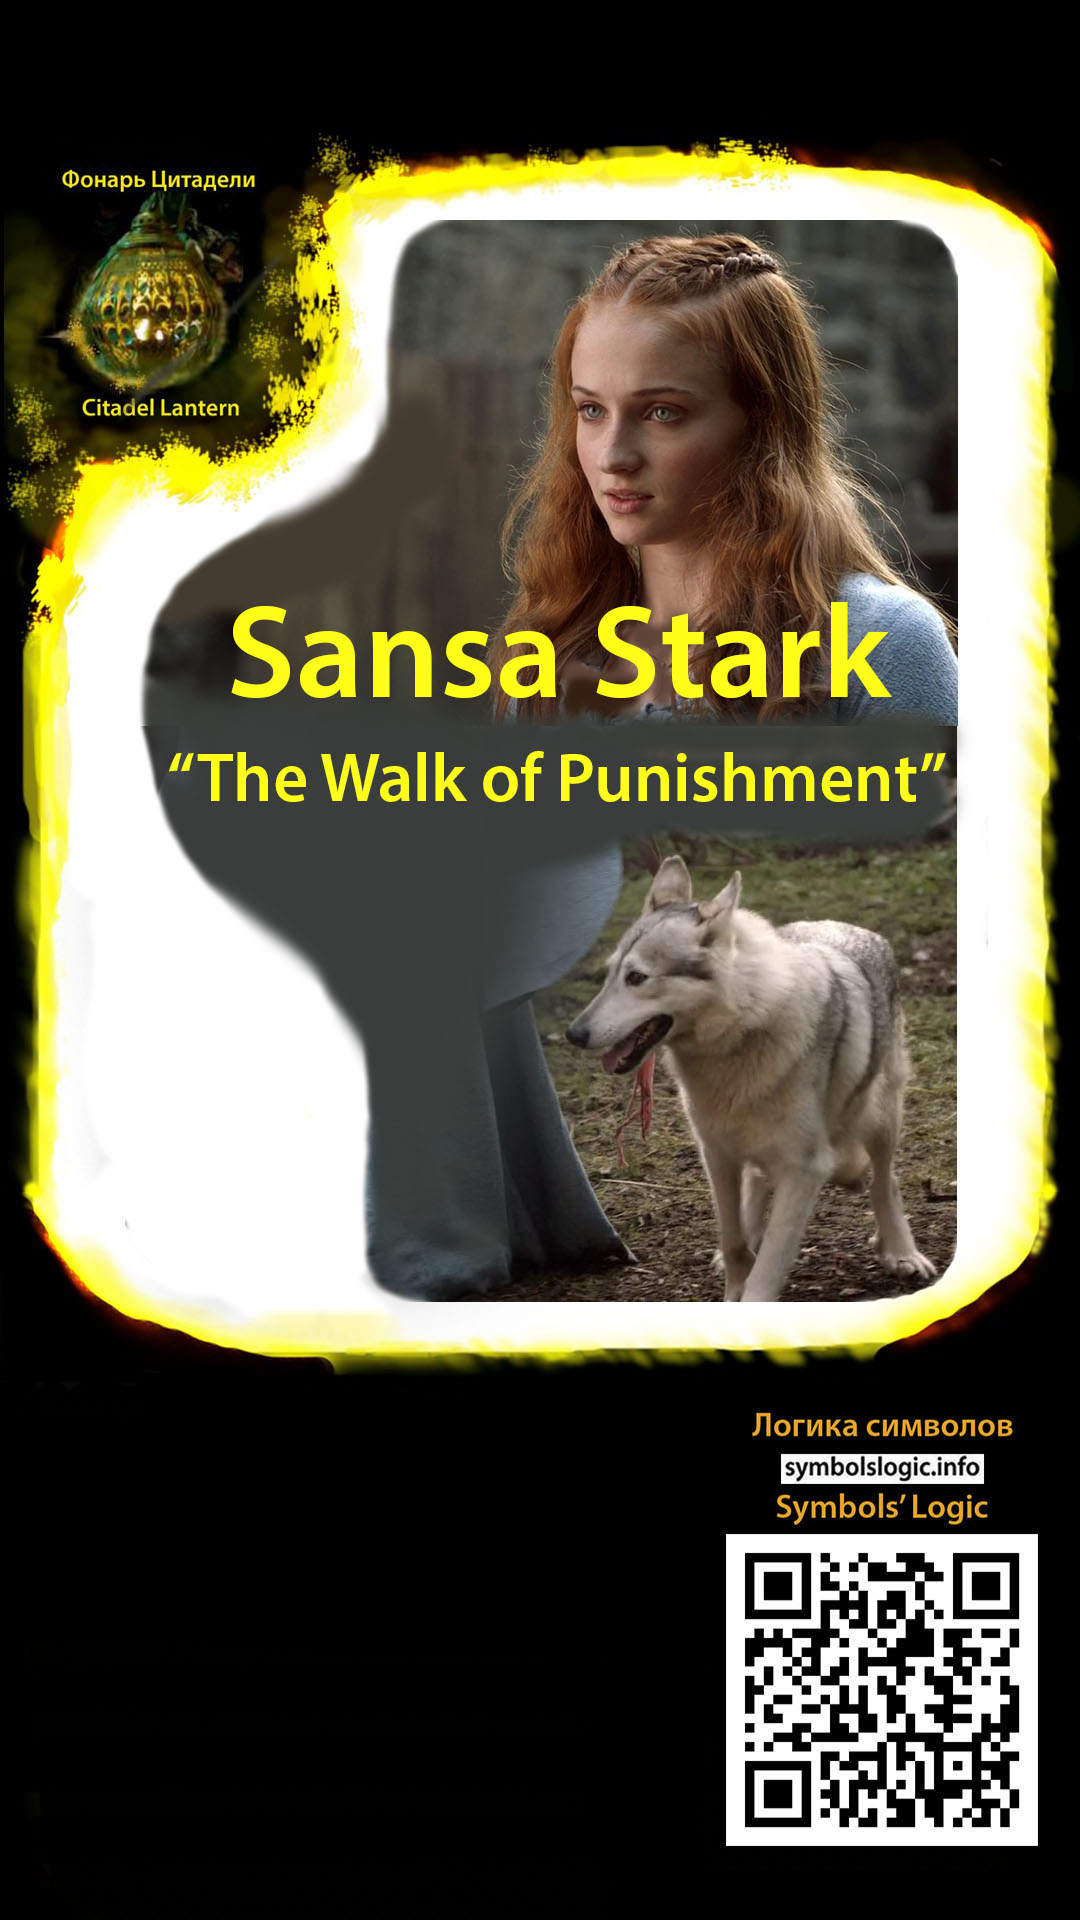 Video Icon Sansa Stark “The Walk of Punishment”